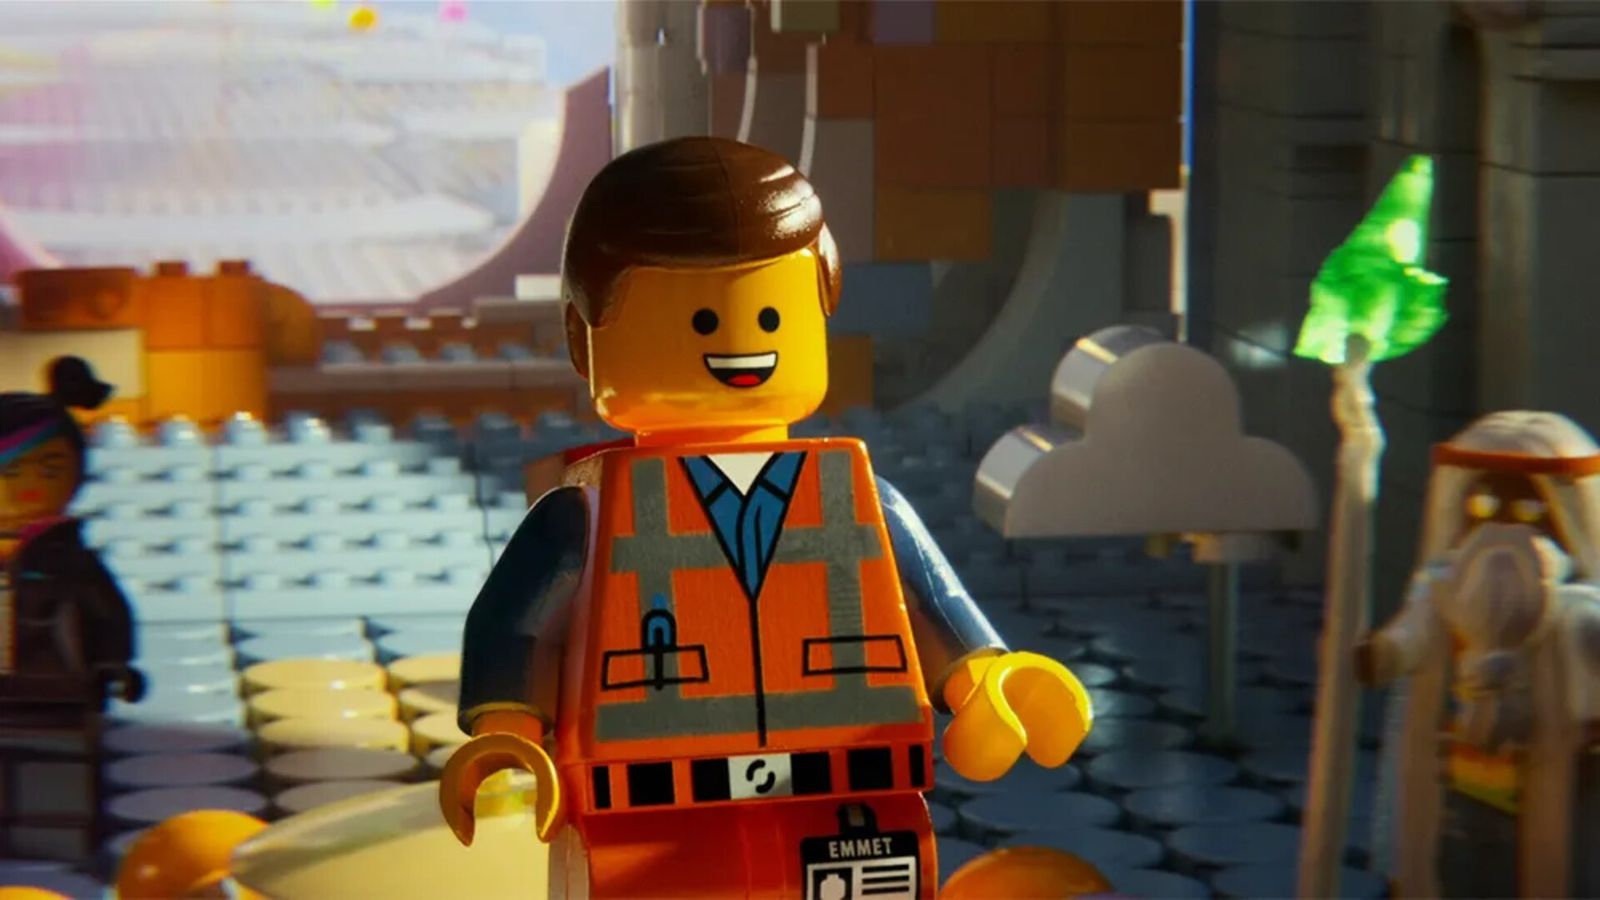 Fortnite LEGO character smiling